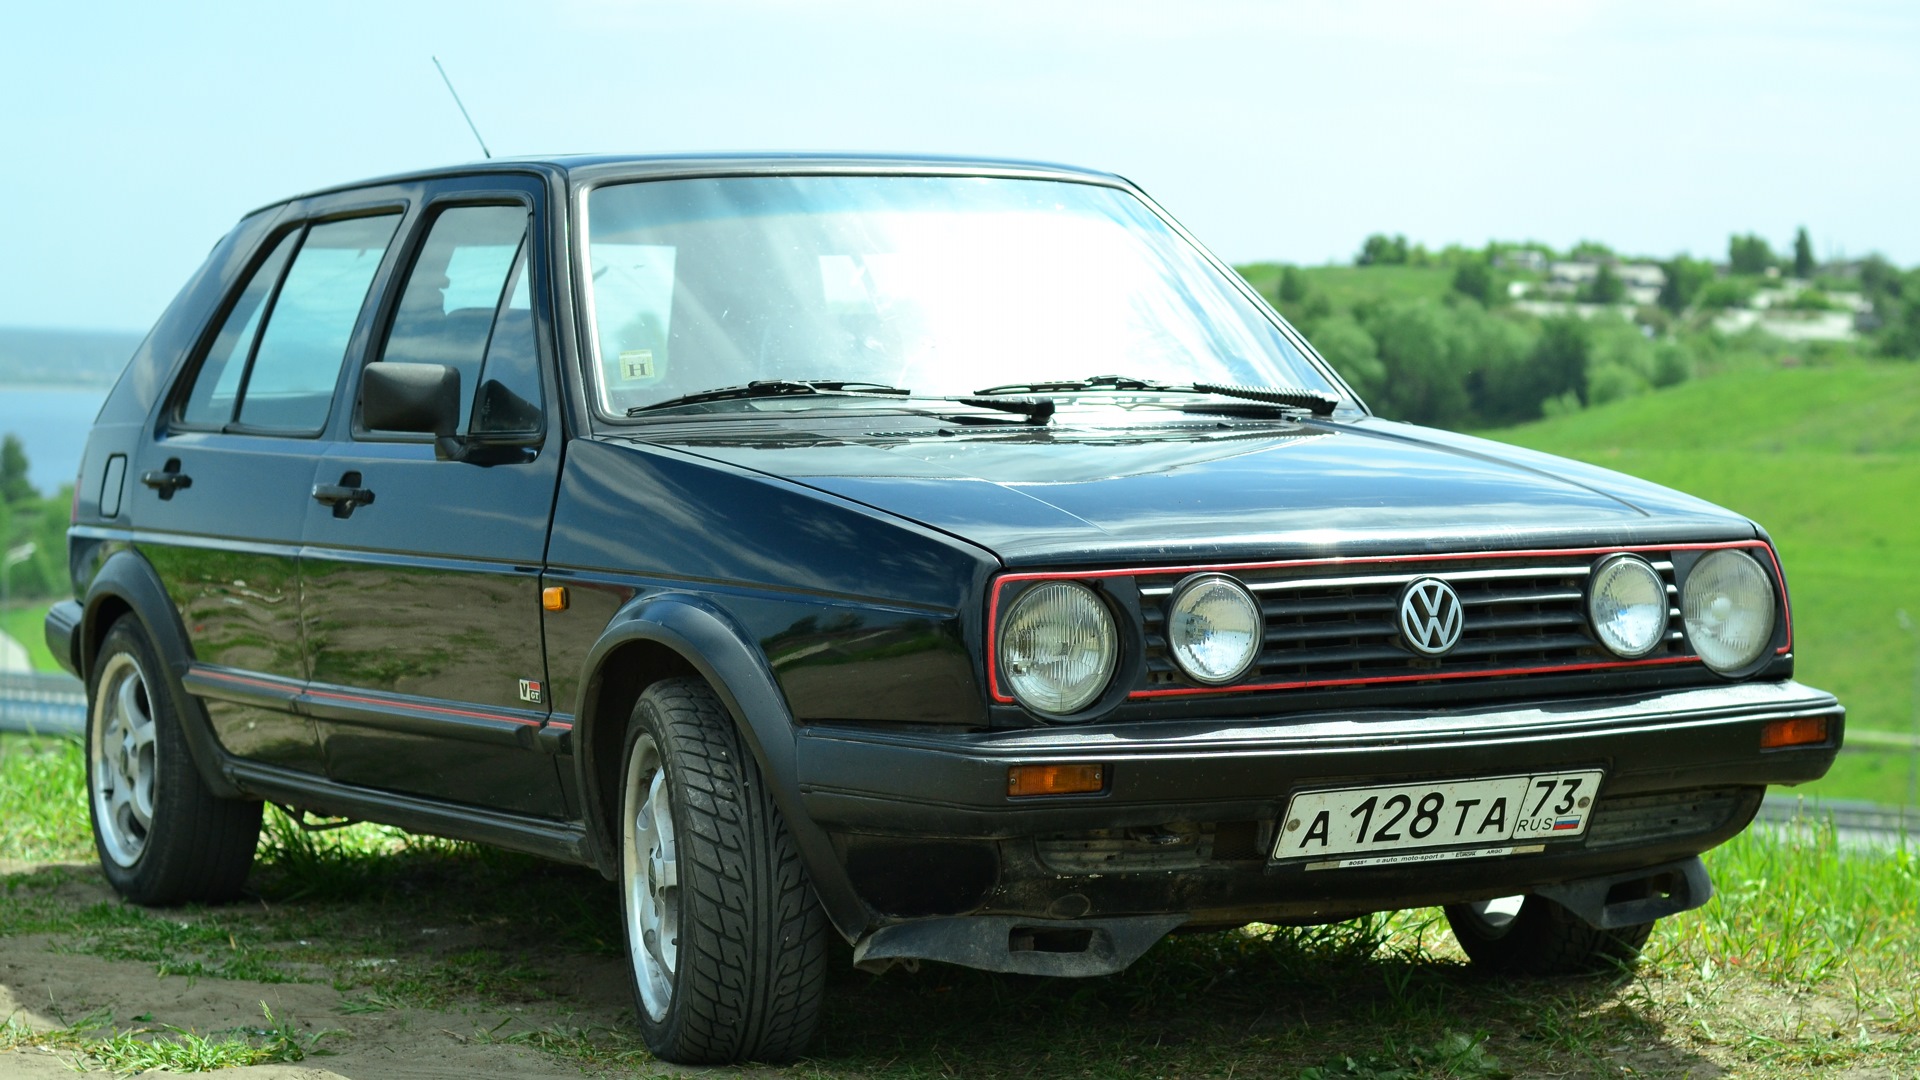 Купить запчасти гольф 2. Volkswagen Golf GTI 1986. Golf 2 GTI 1986. Фольксваген гольф 2 1986. Фольксваген гольф 2 1986 года.